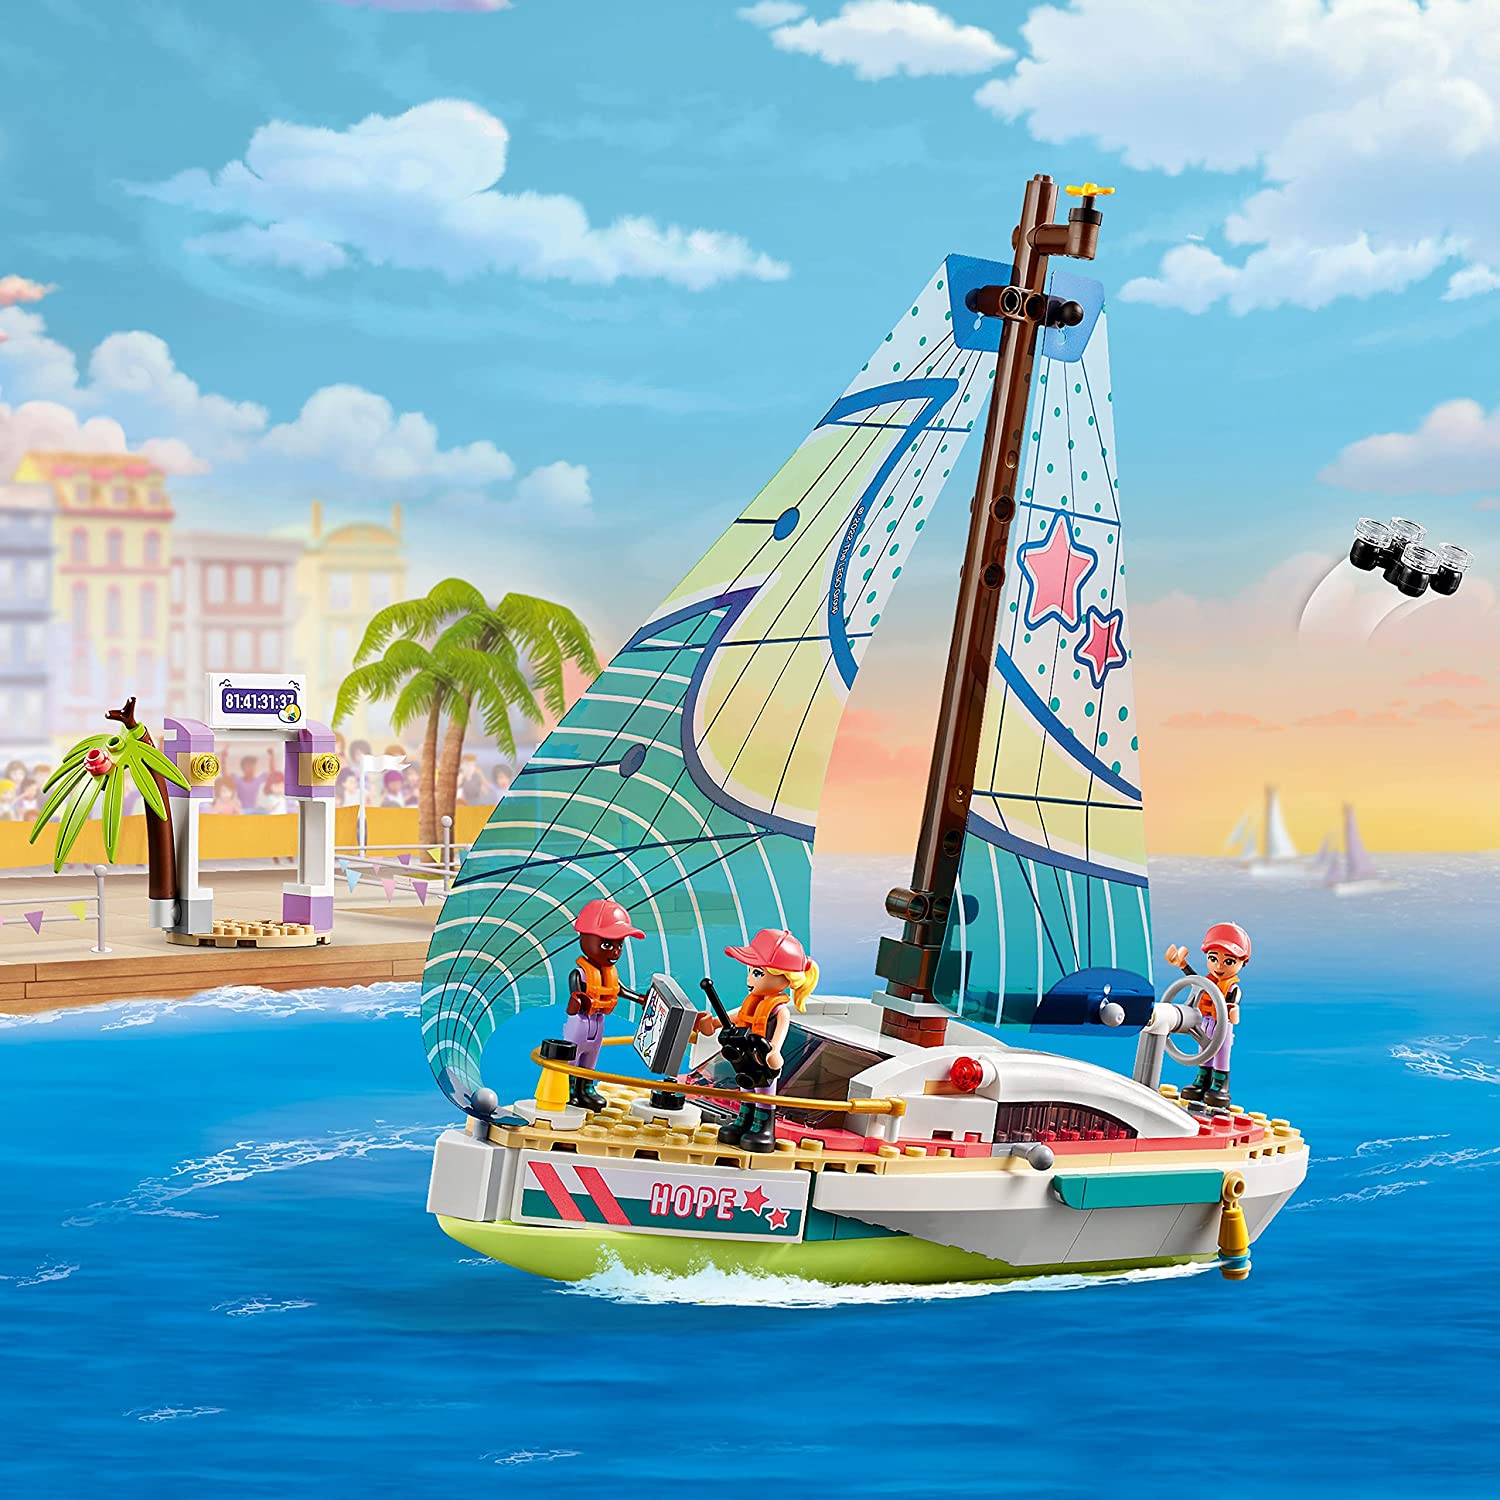 Lego Friends - Stephanie'S Sailing Adventure